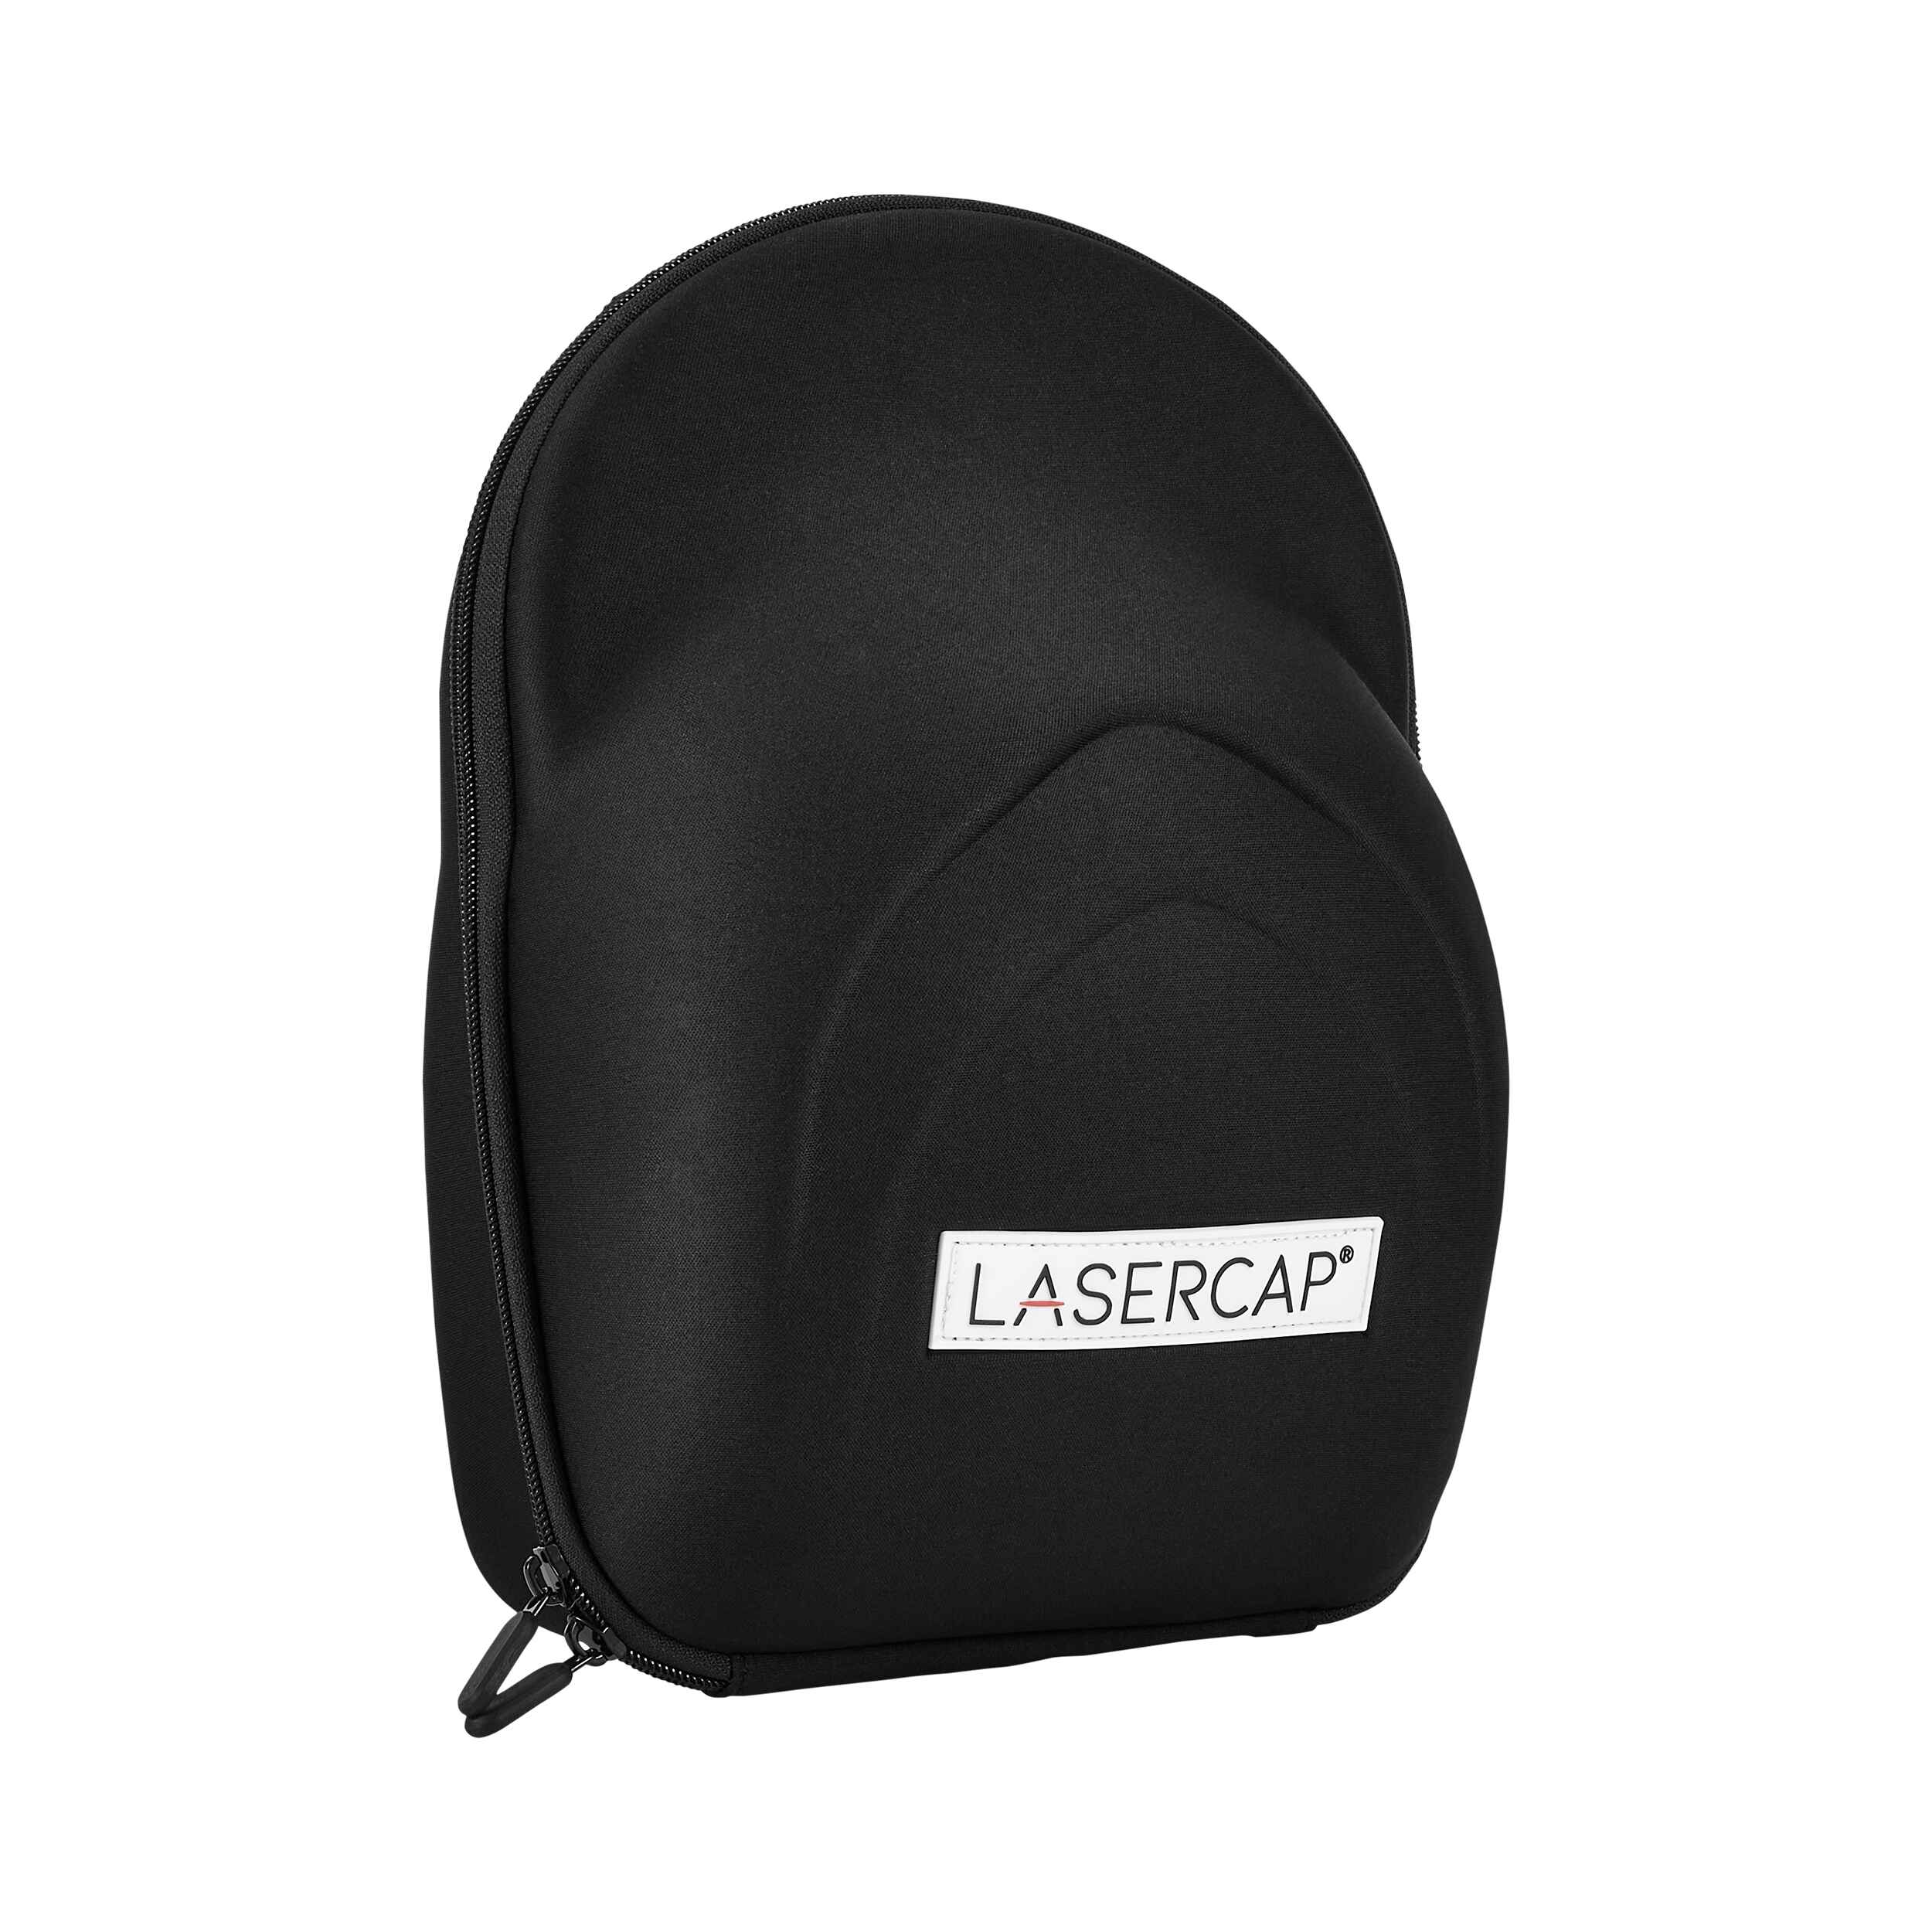 LaserCap Foam Carrying Case